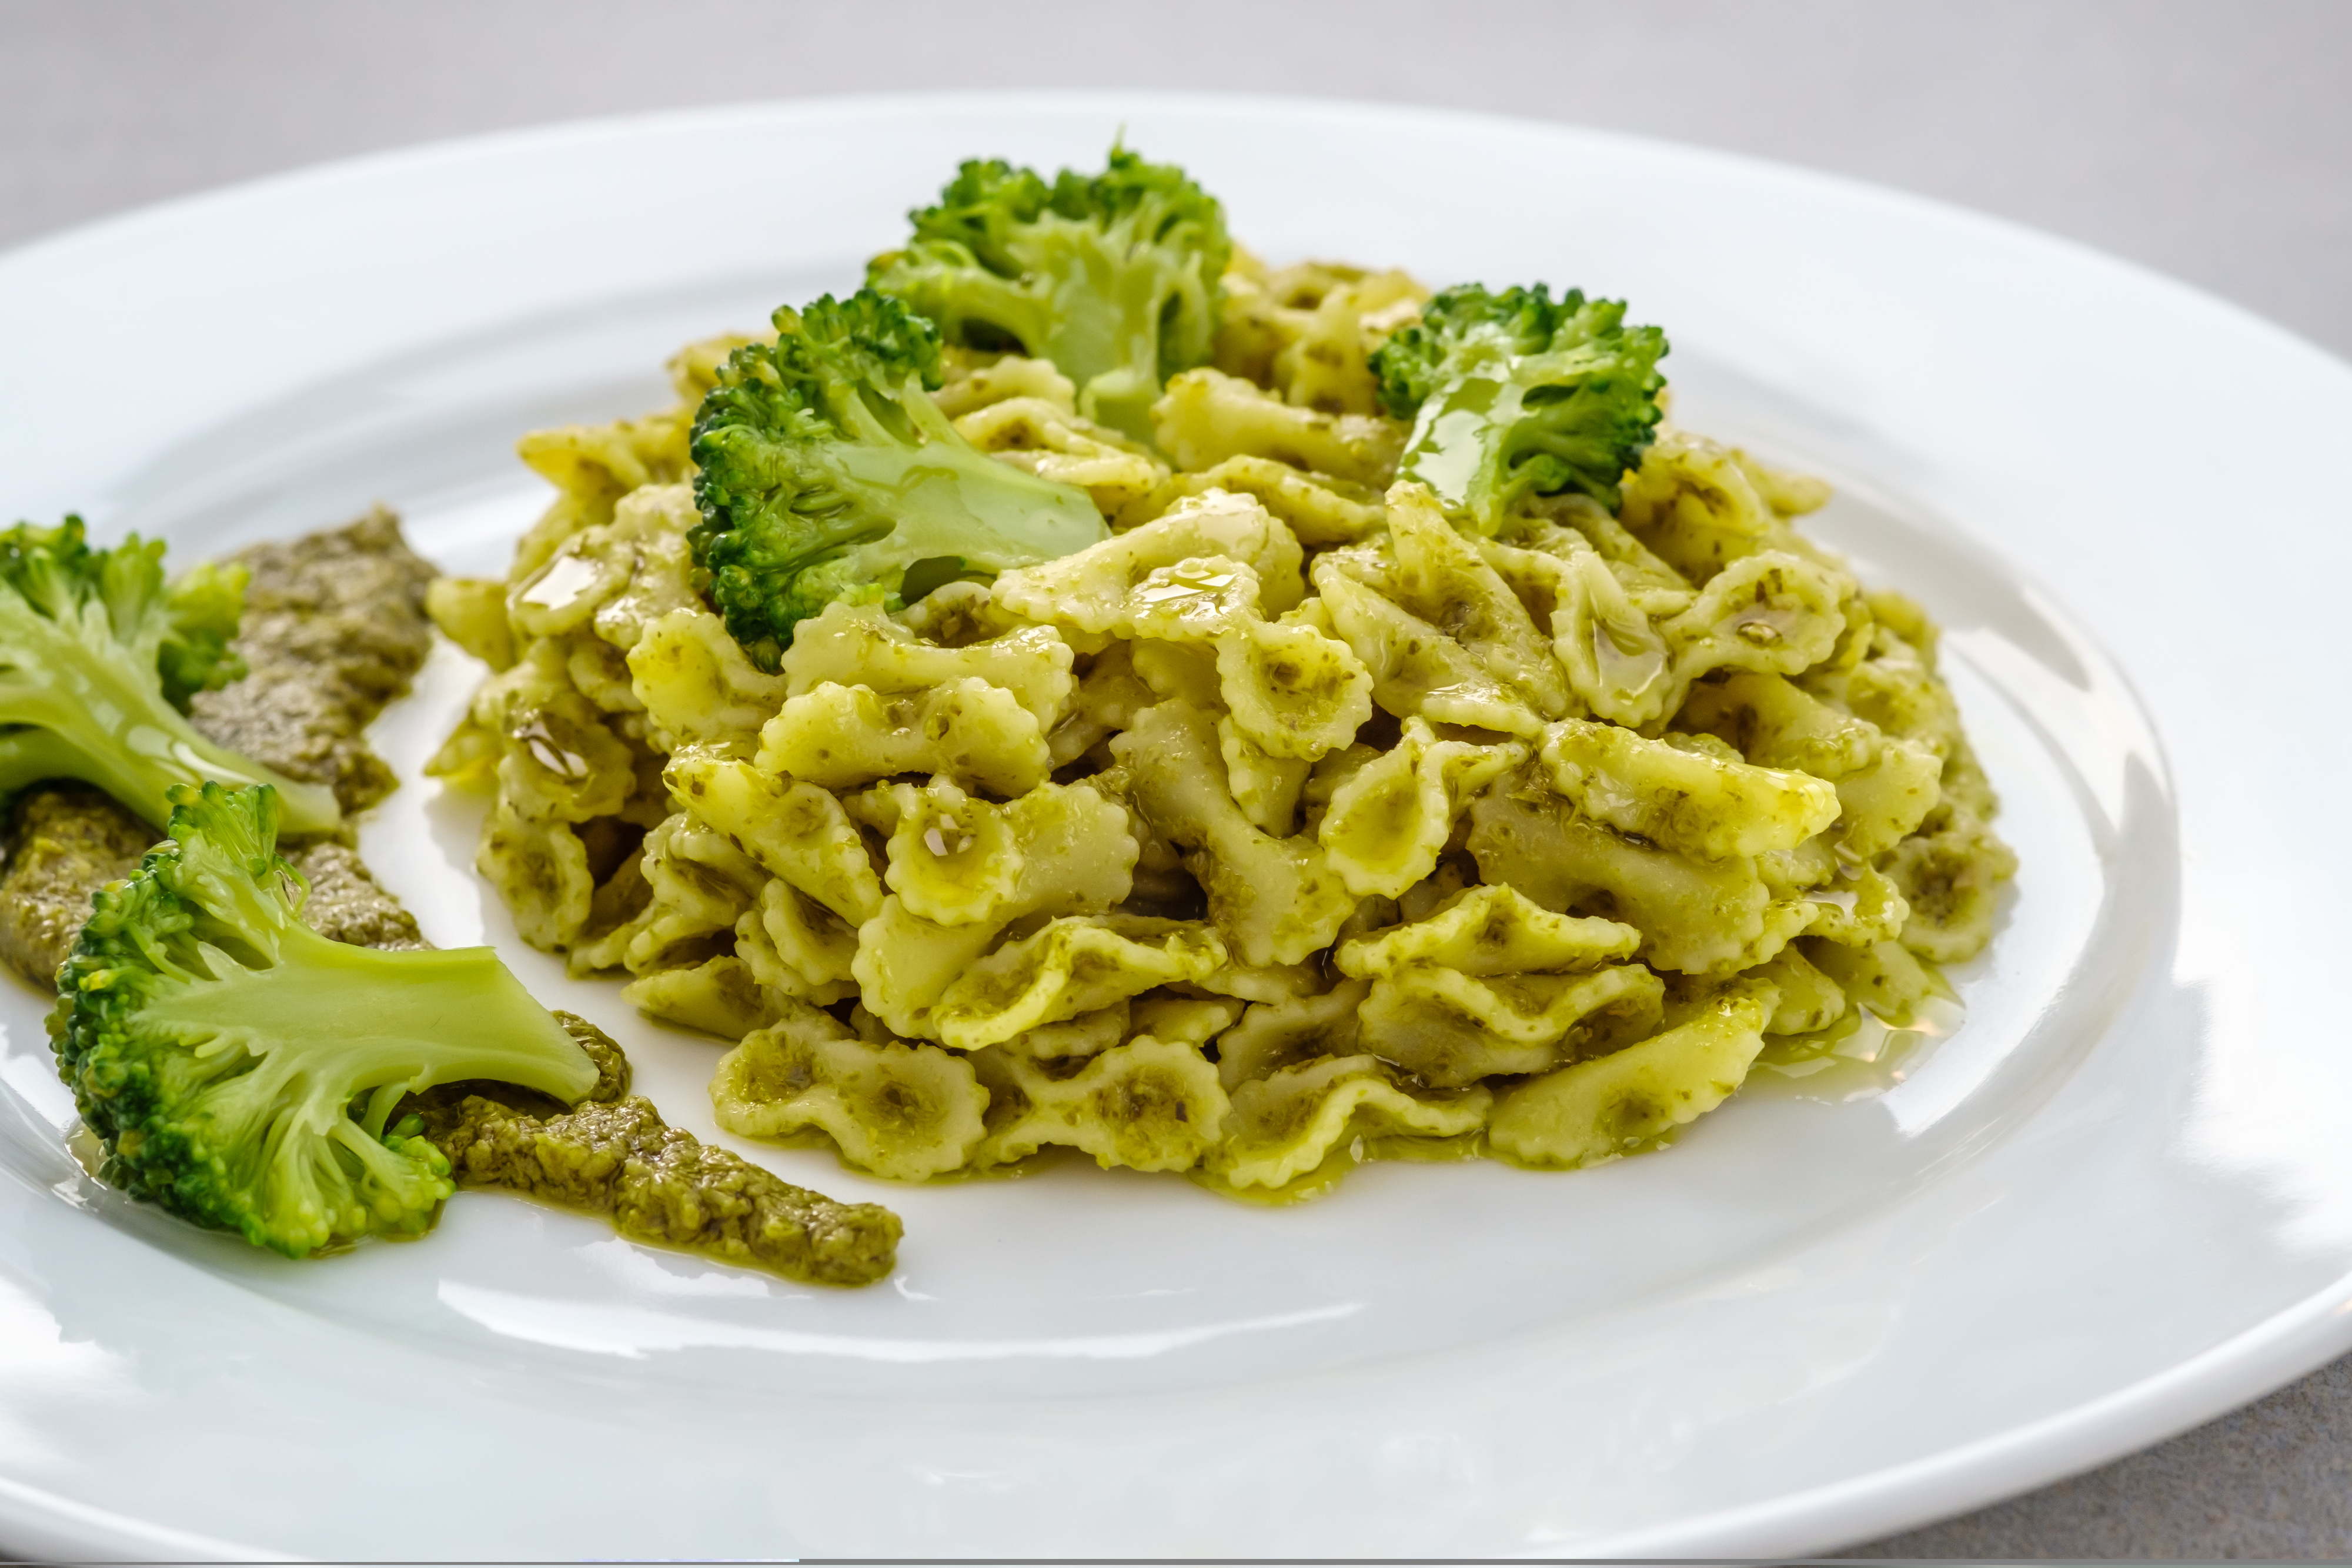 bowtie pasta with broccoli